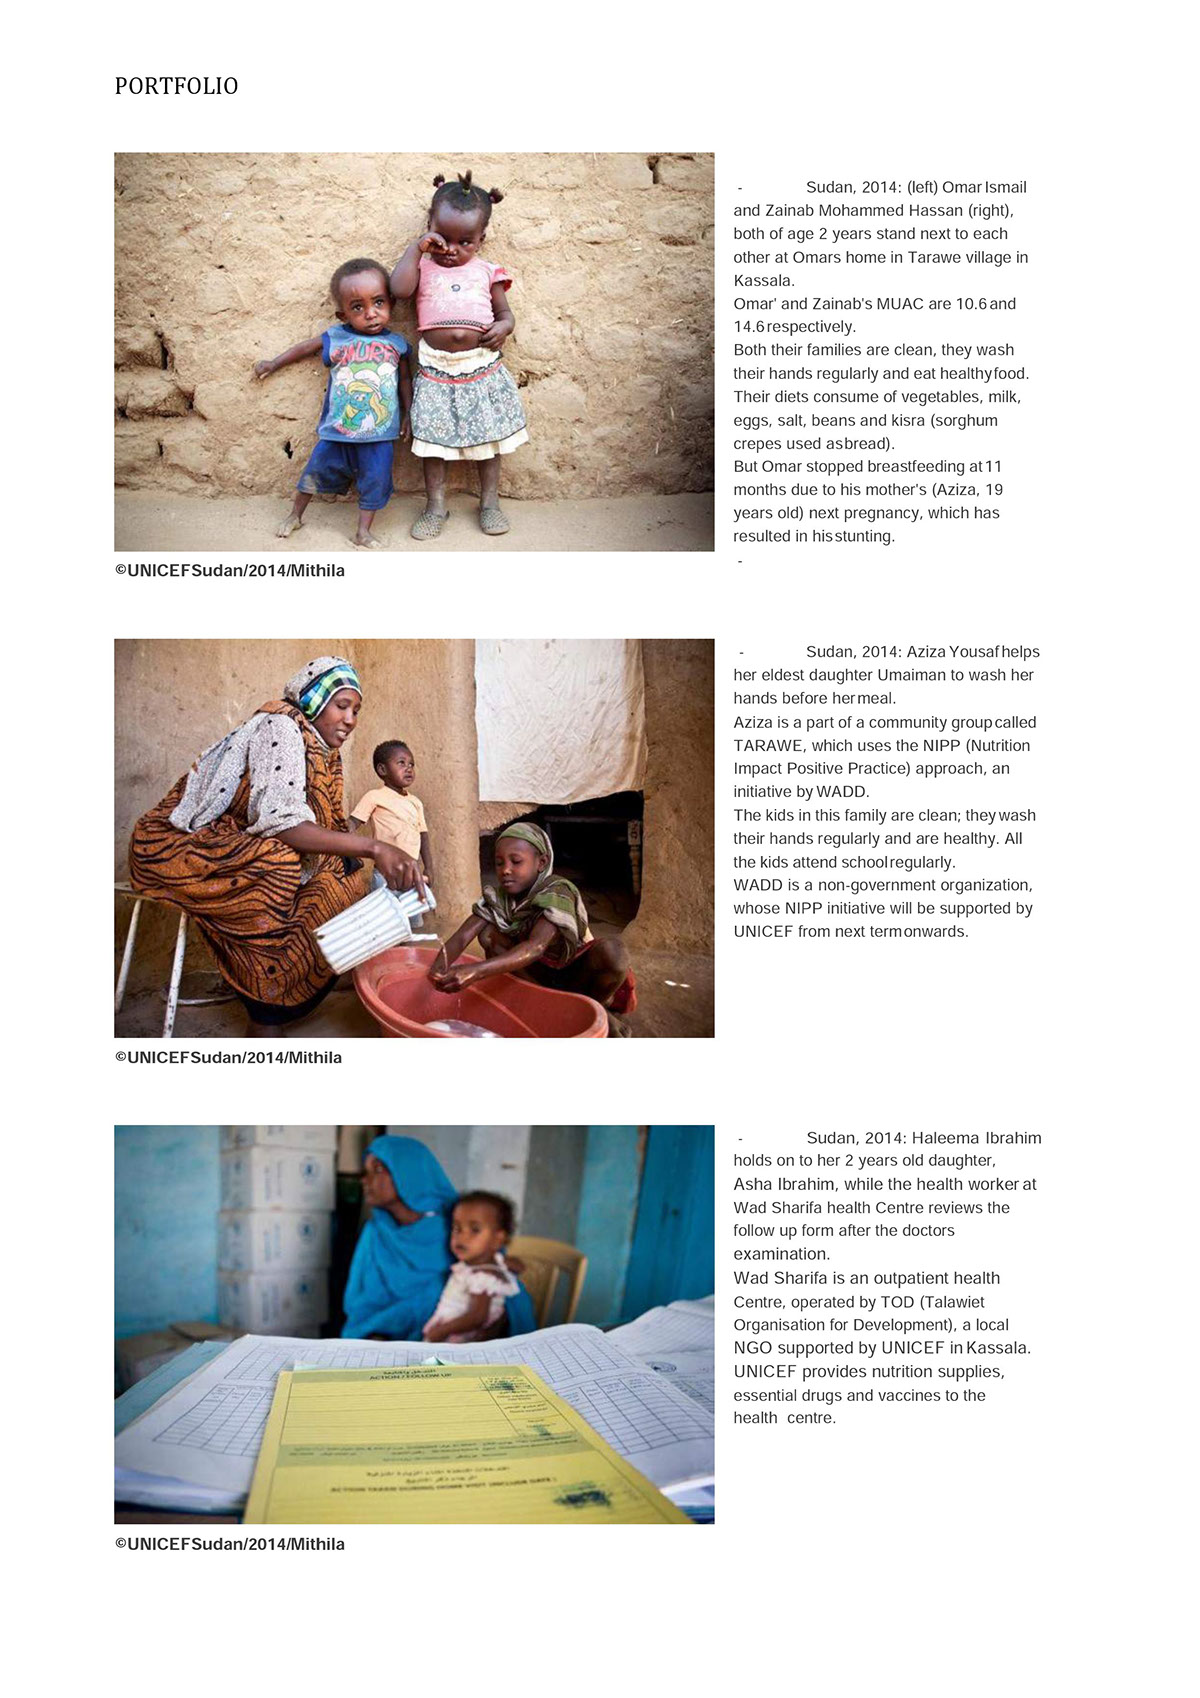 development work Documentary Photography unicef UNHCR undp kidasha USAID Chemonics Huff Post Sudan nepal India nutrition Education child rights